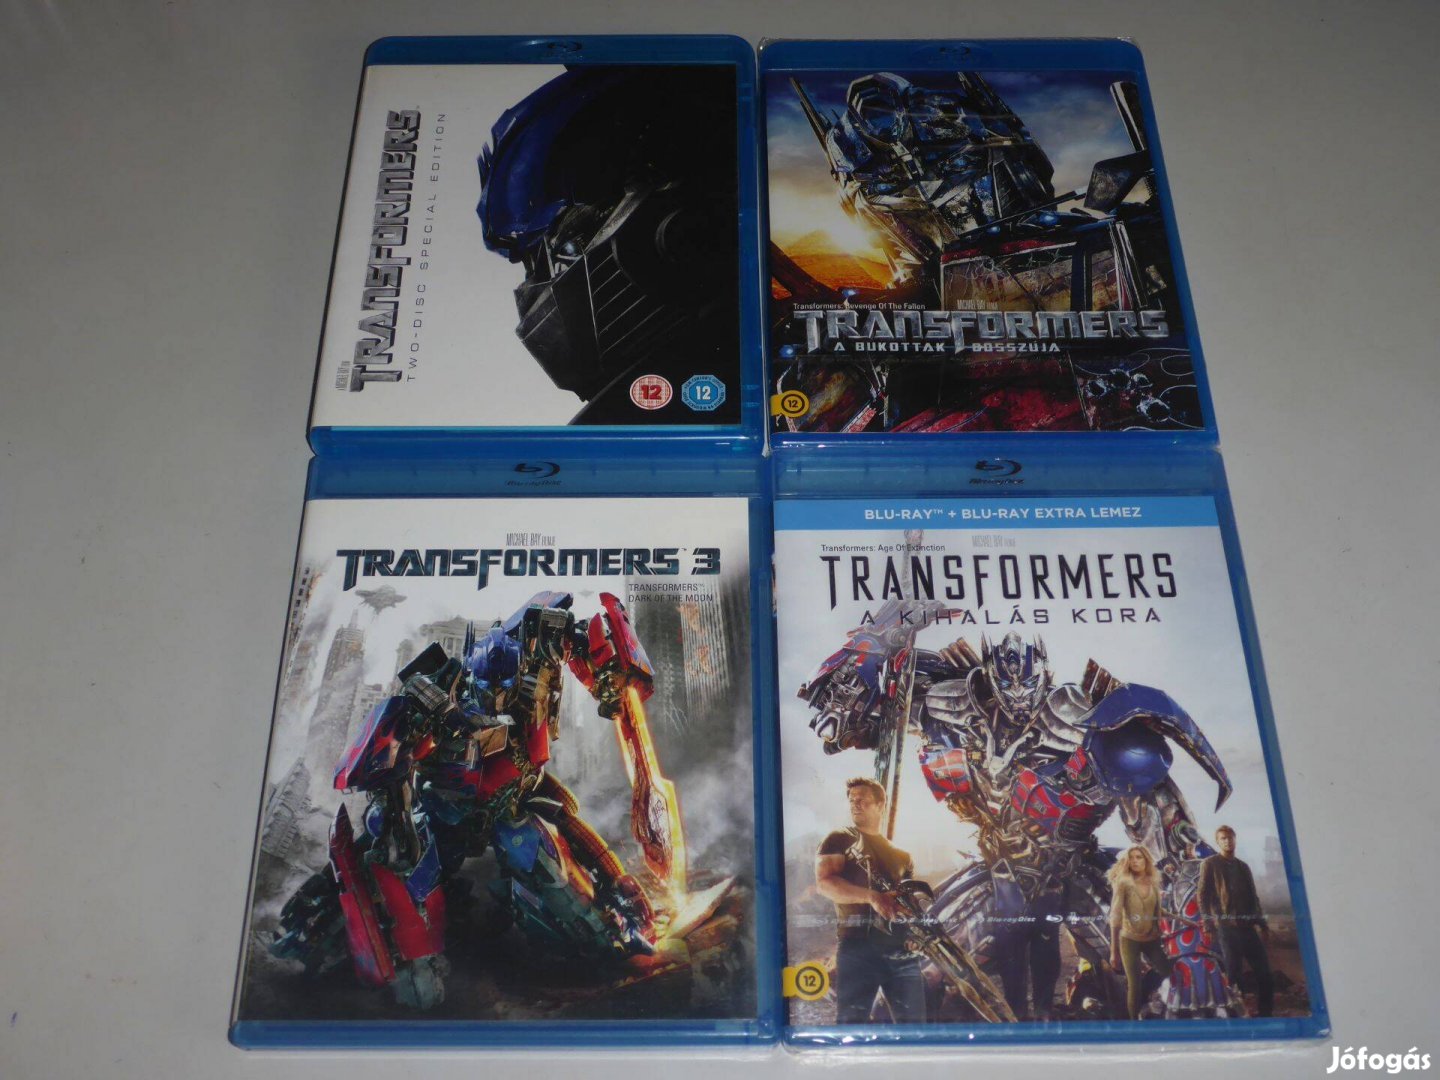 Transformers gyűjtemény blu-ray film